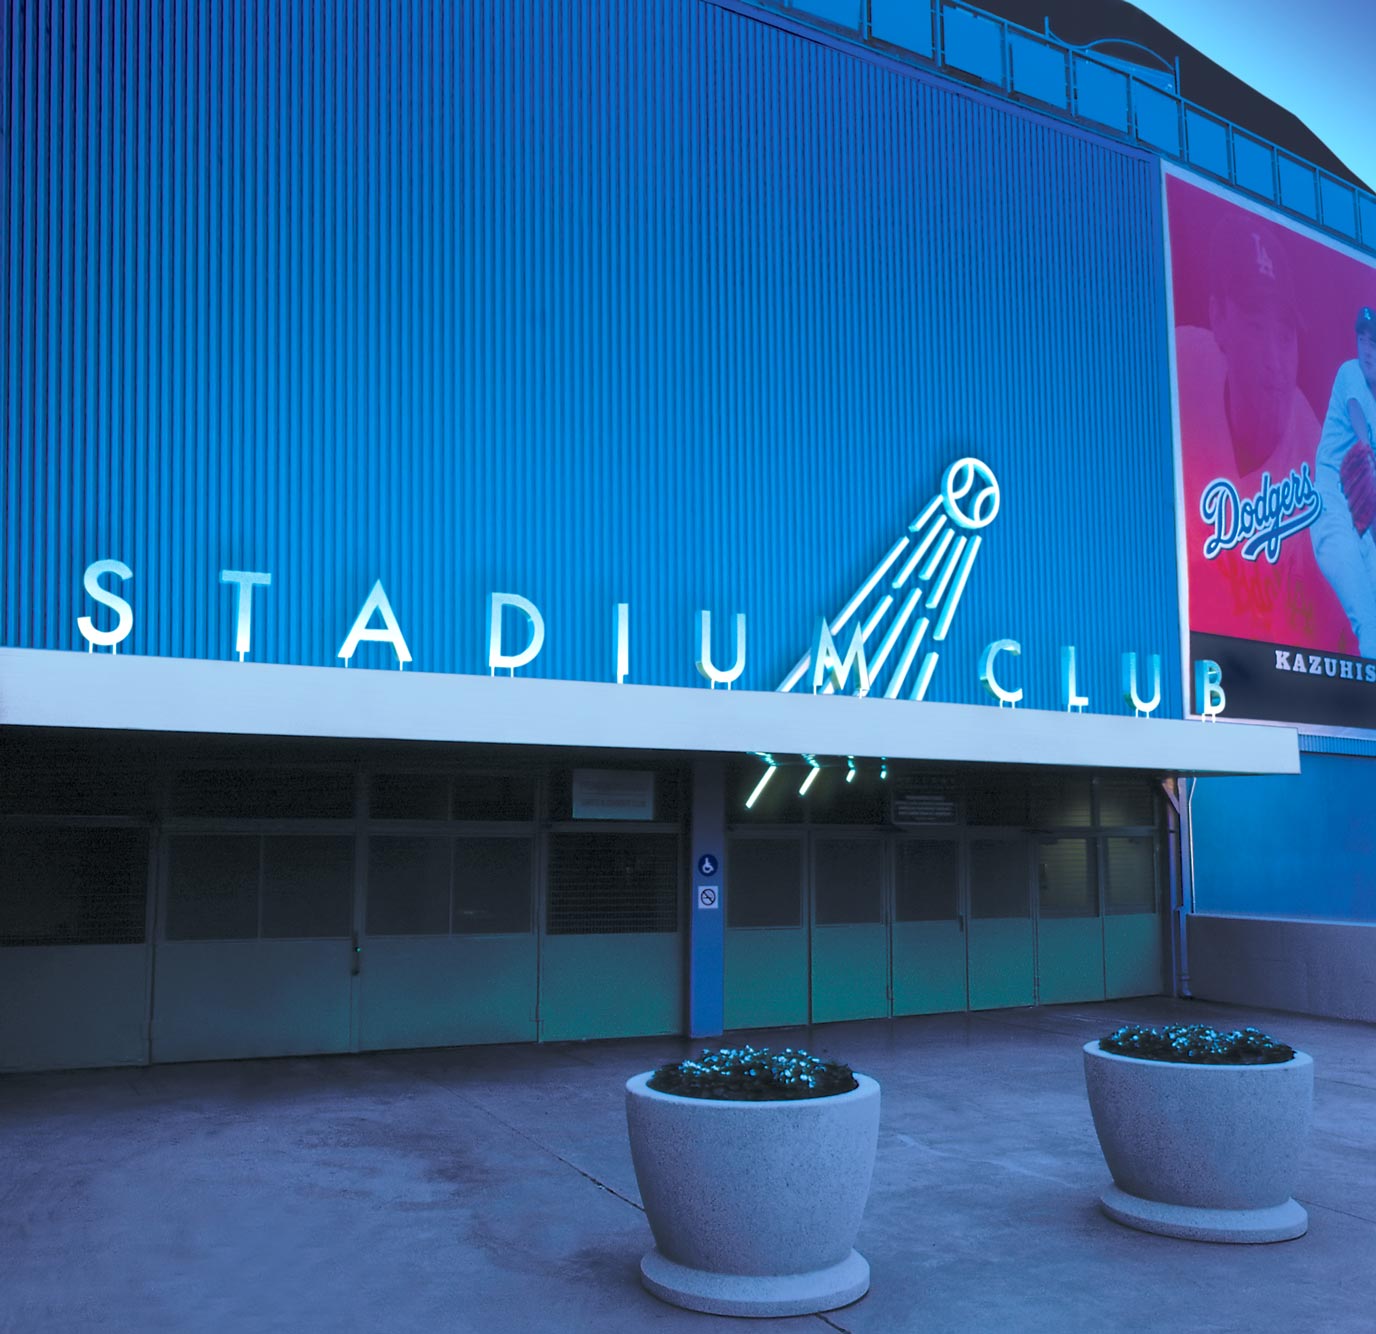 Dodgers Stadium Club entrance signage